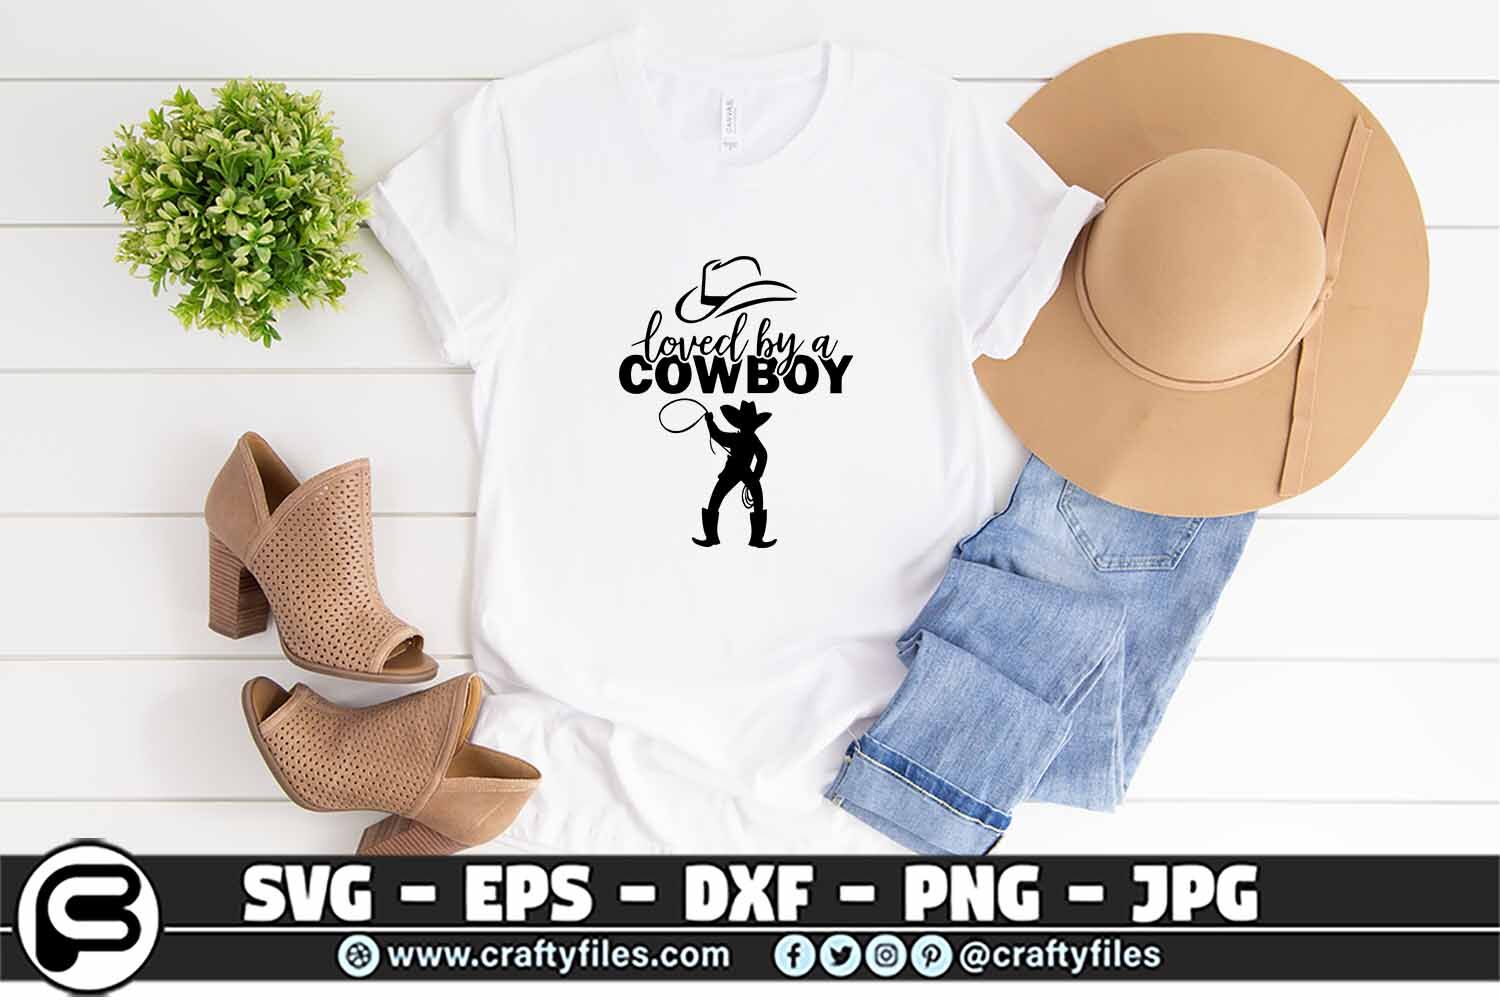 Kick the dust u shirt shirt SVG Cutting Cricut Silhouette Country Western Boots Cowboy Cowgirl design cricut cut file silhouette